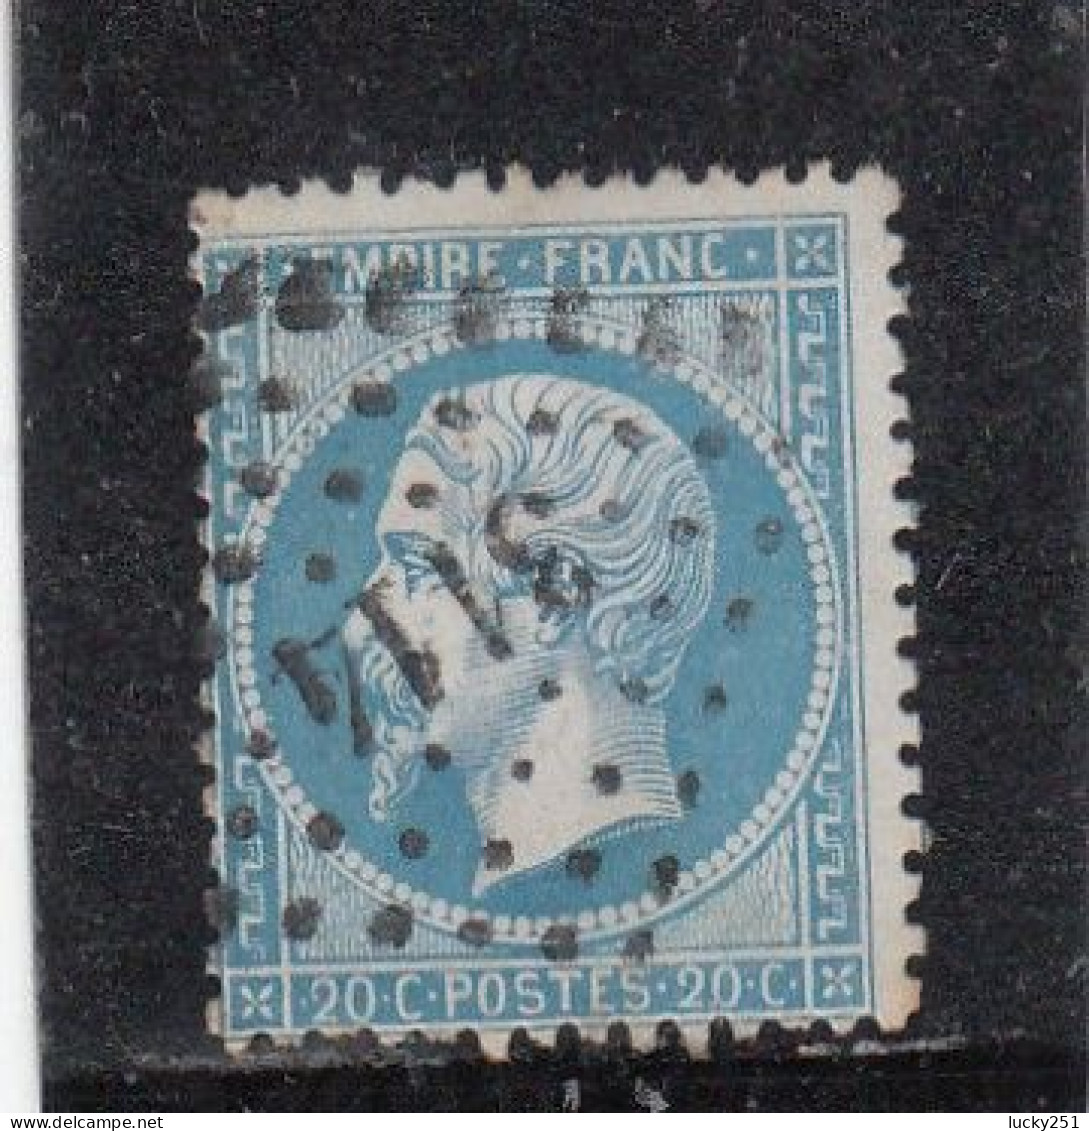 France - Année 1862 - N°YT 22 - Obligations Losange PC - 20c Bleu - 1862 Napoleone III